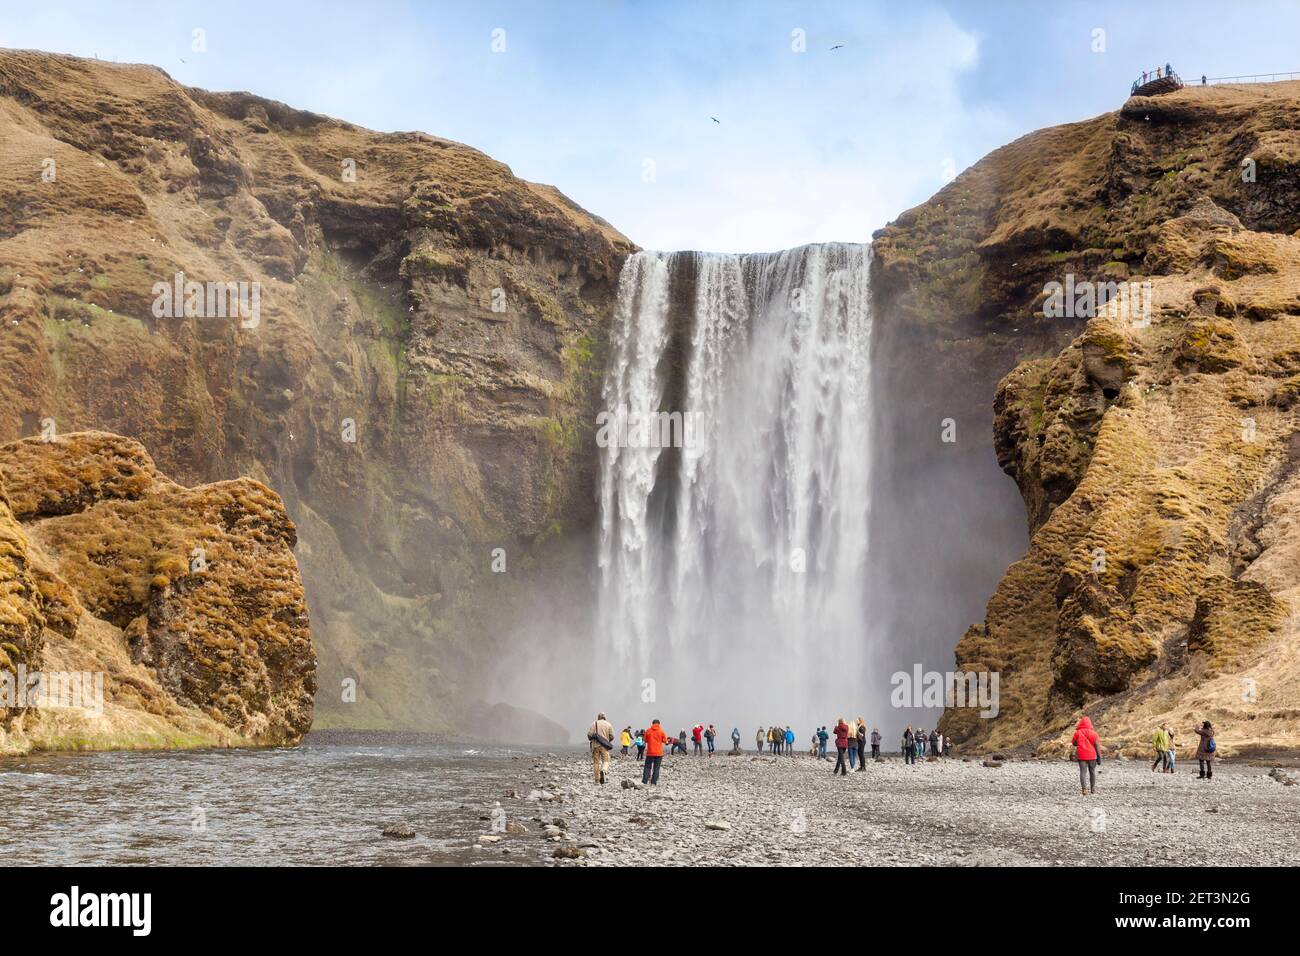 22. April 2018: Skogafoss, Südisland. - Besucher am Fuße des Skogafoss Wasserfall, Süd-Island. Stockfoto